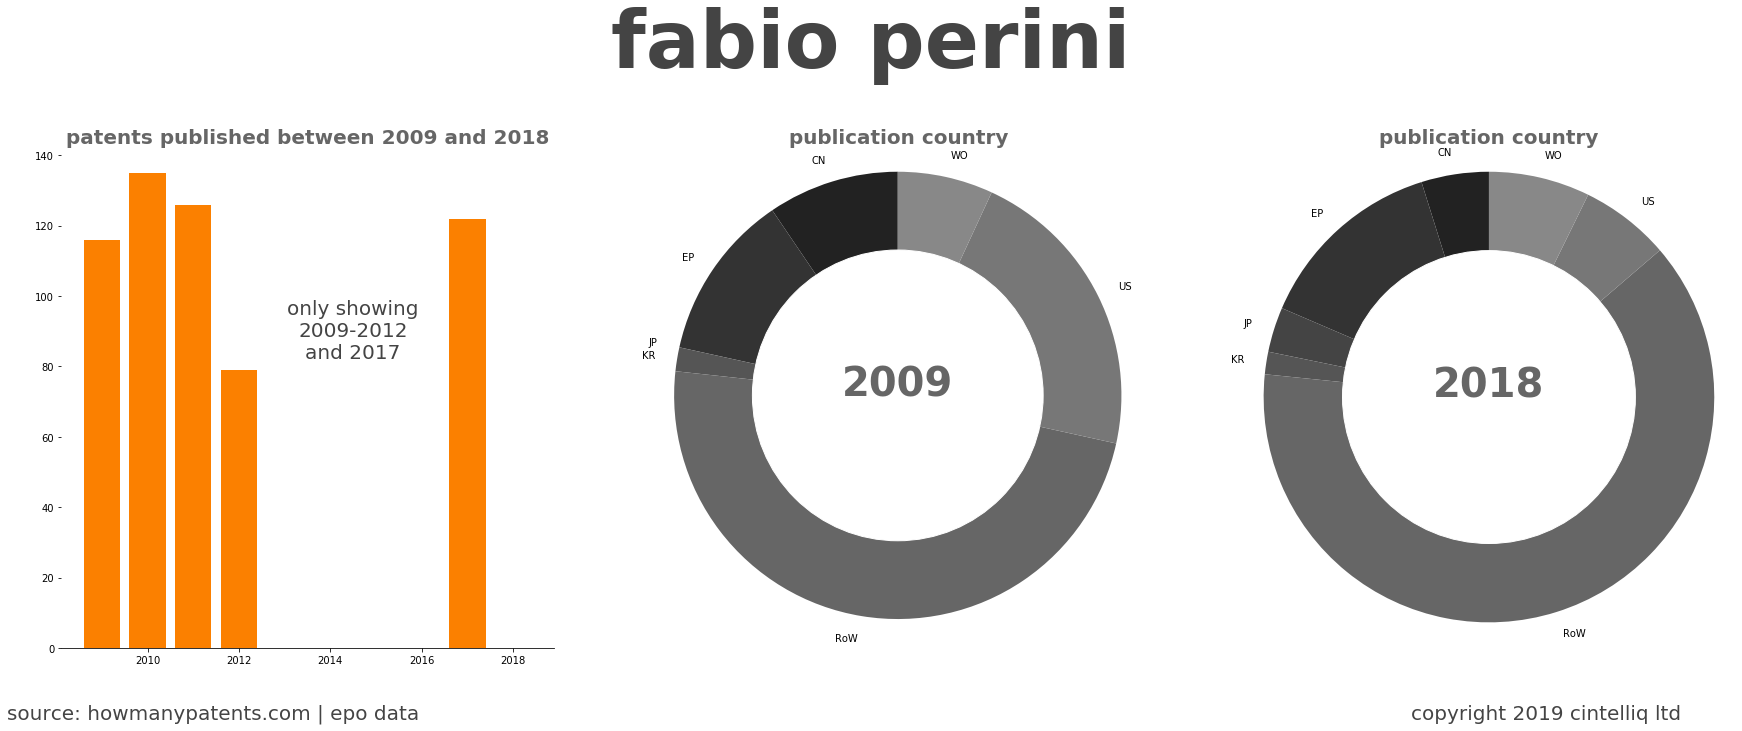 summary of patents for Fabio Perini